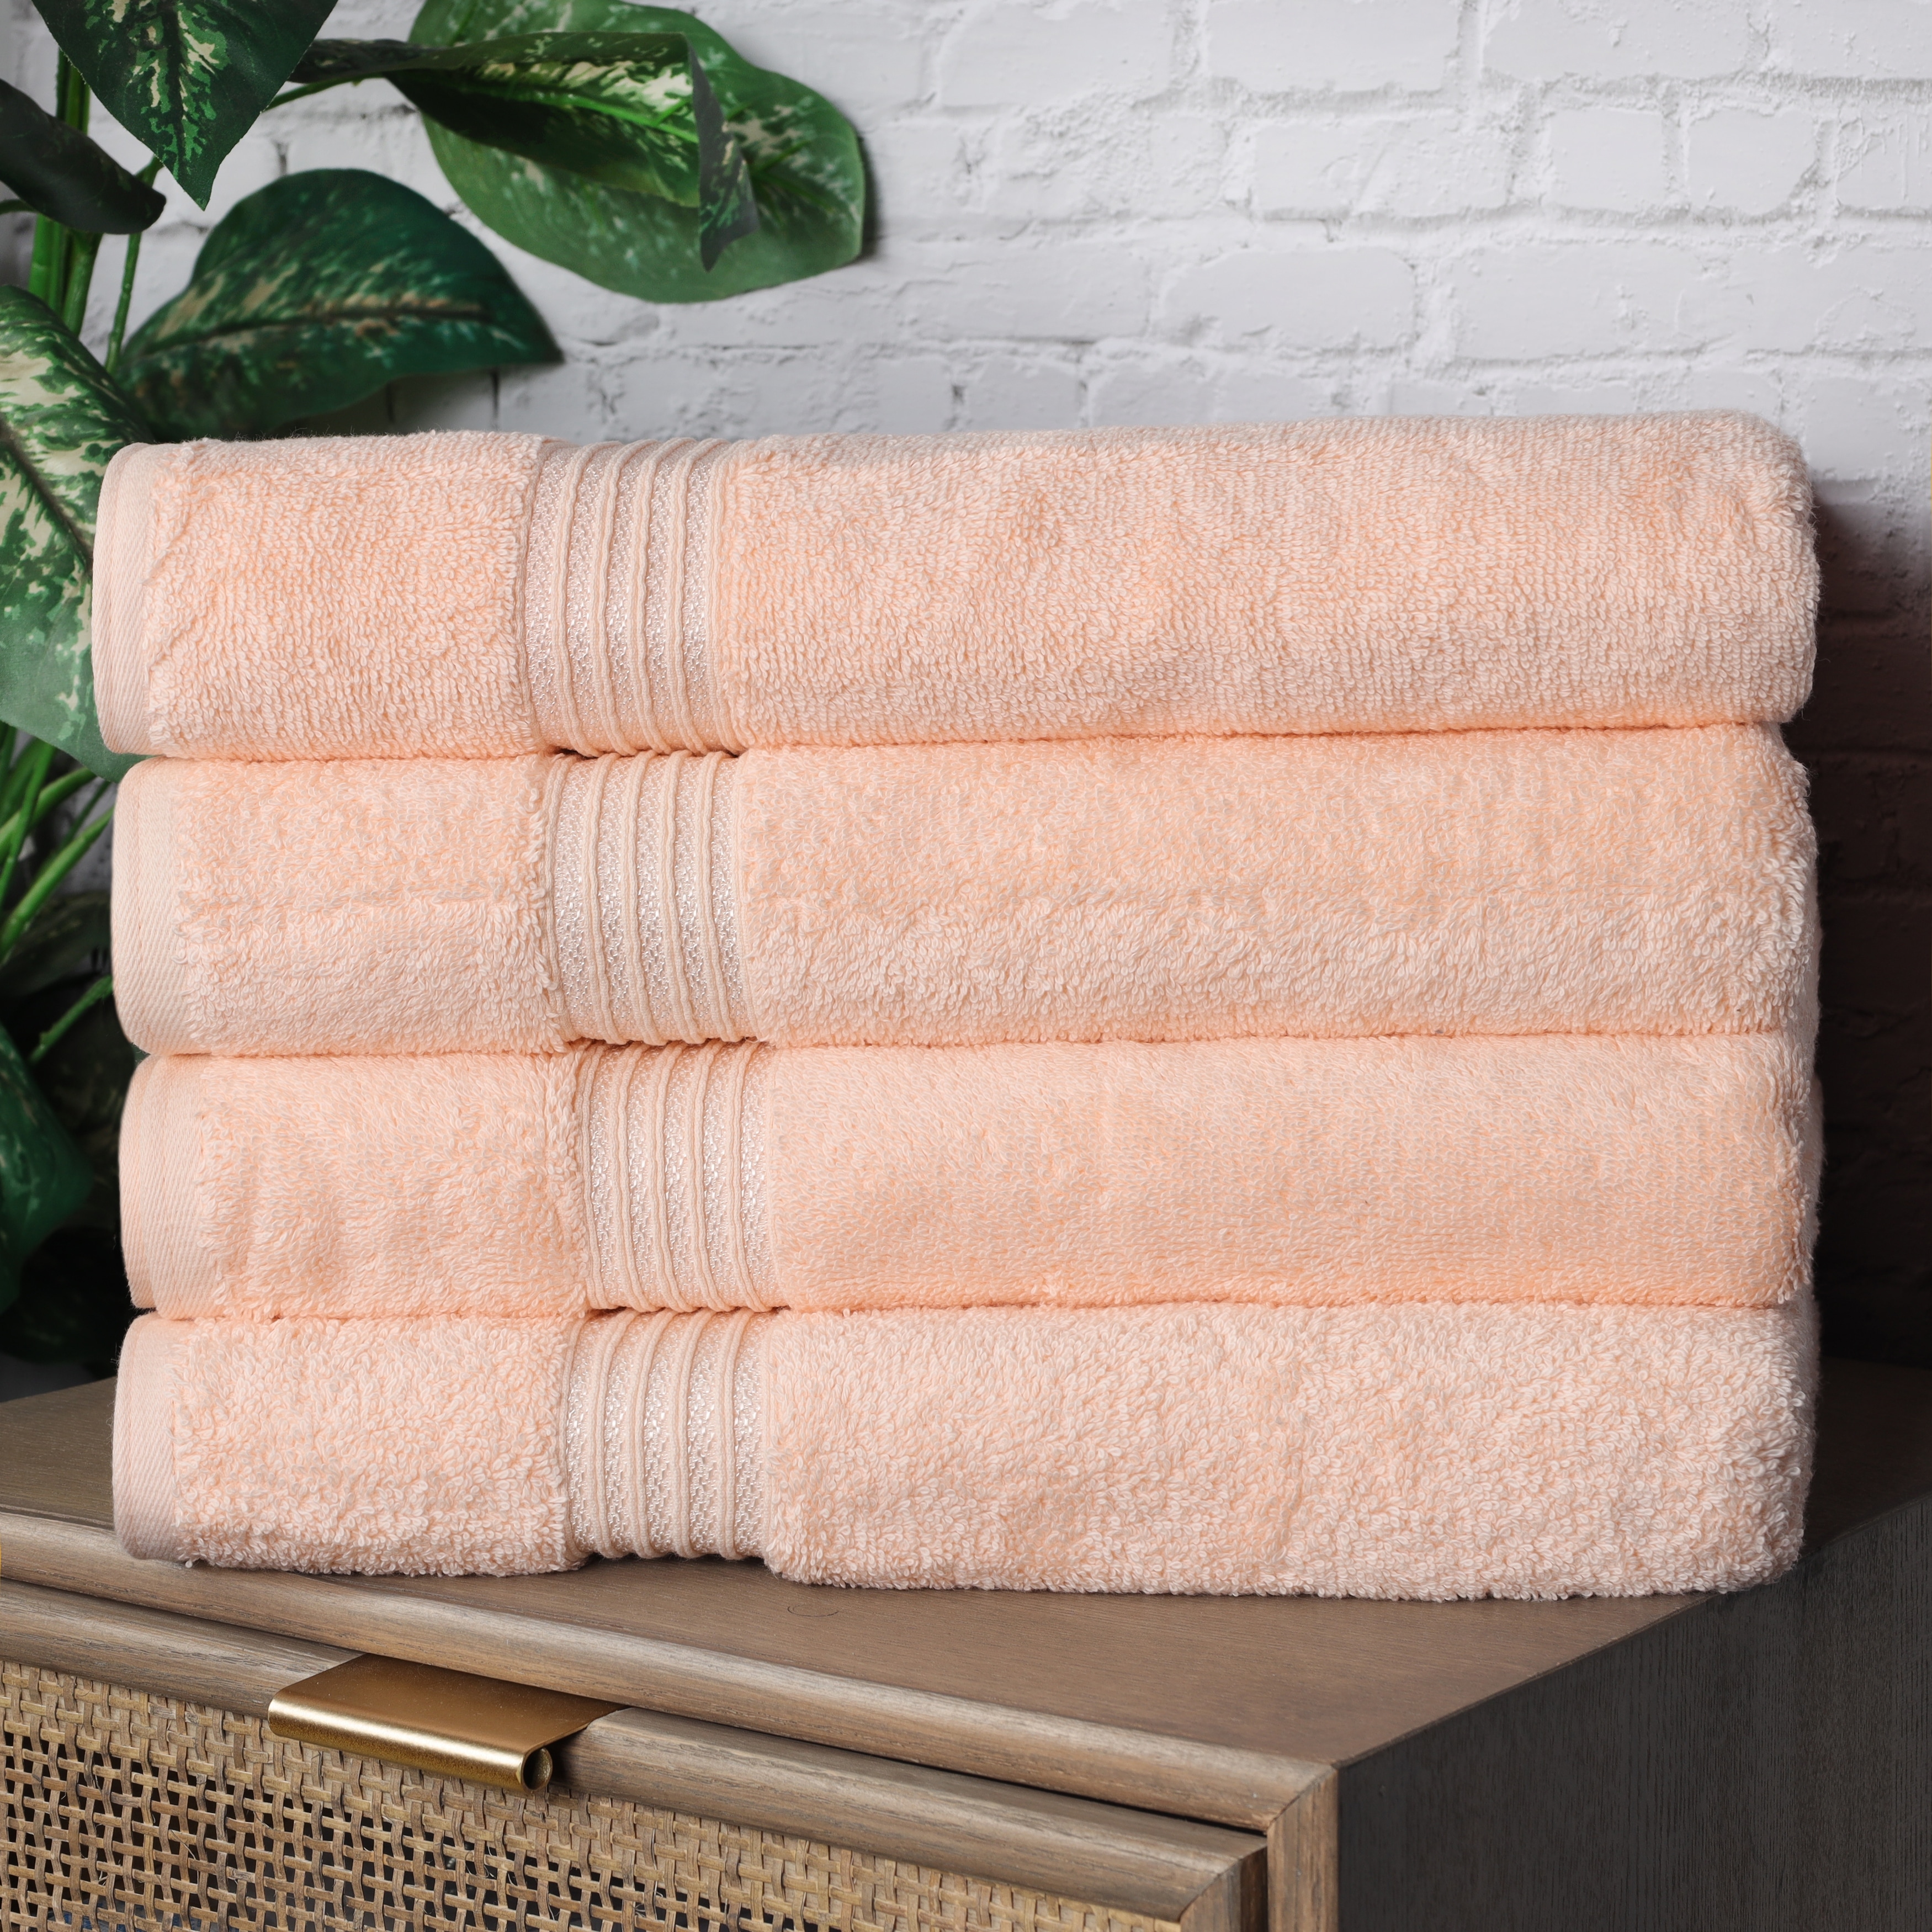 Superior Egyptian Cotton Absorbent Medium Weight Towel - (Set of 4